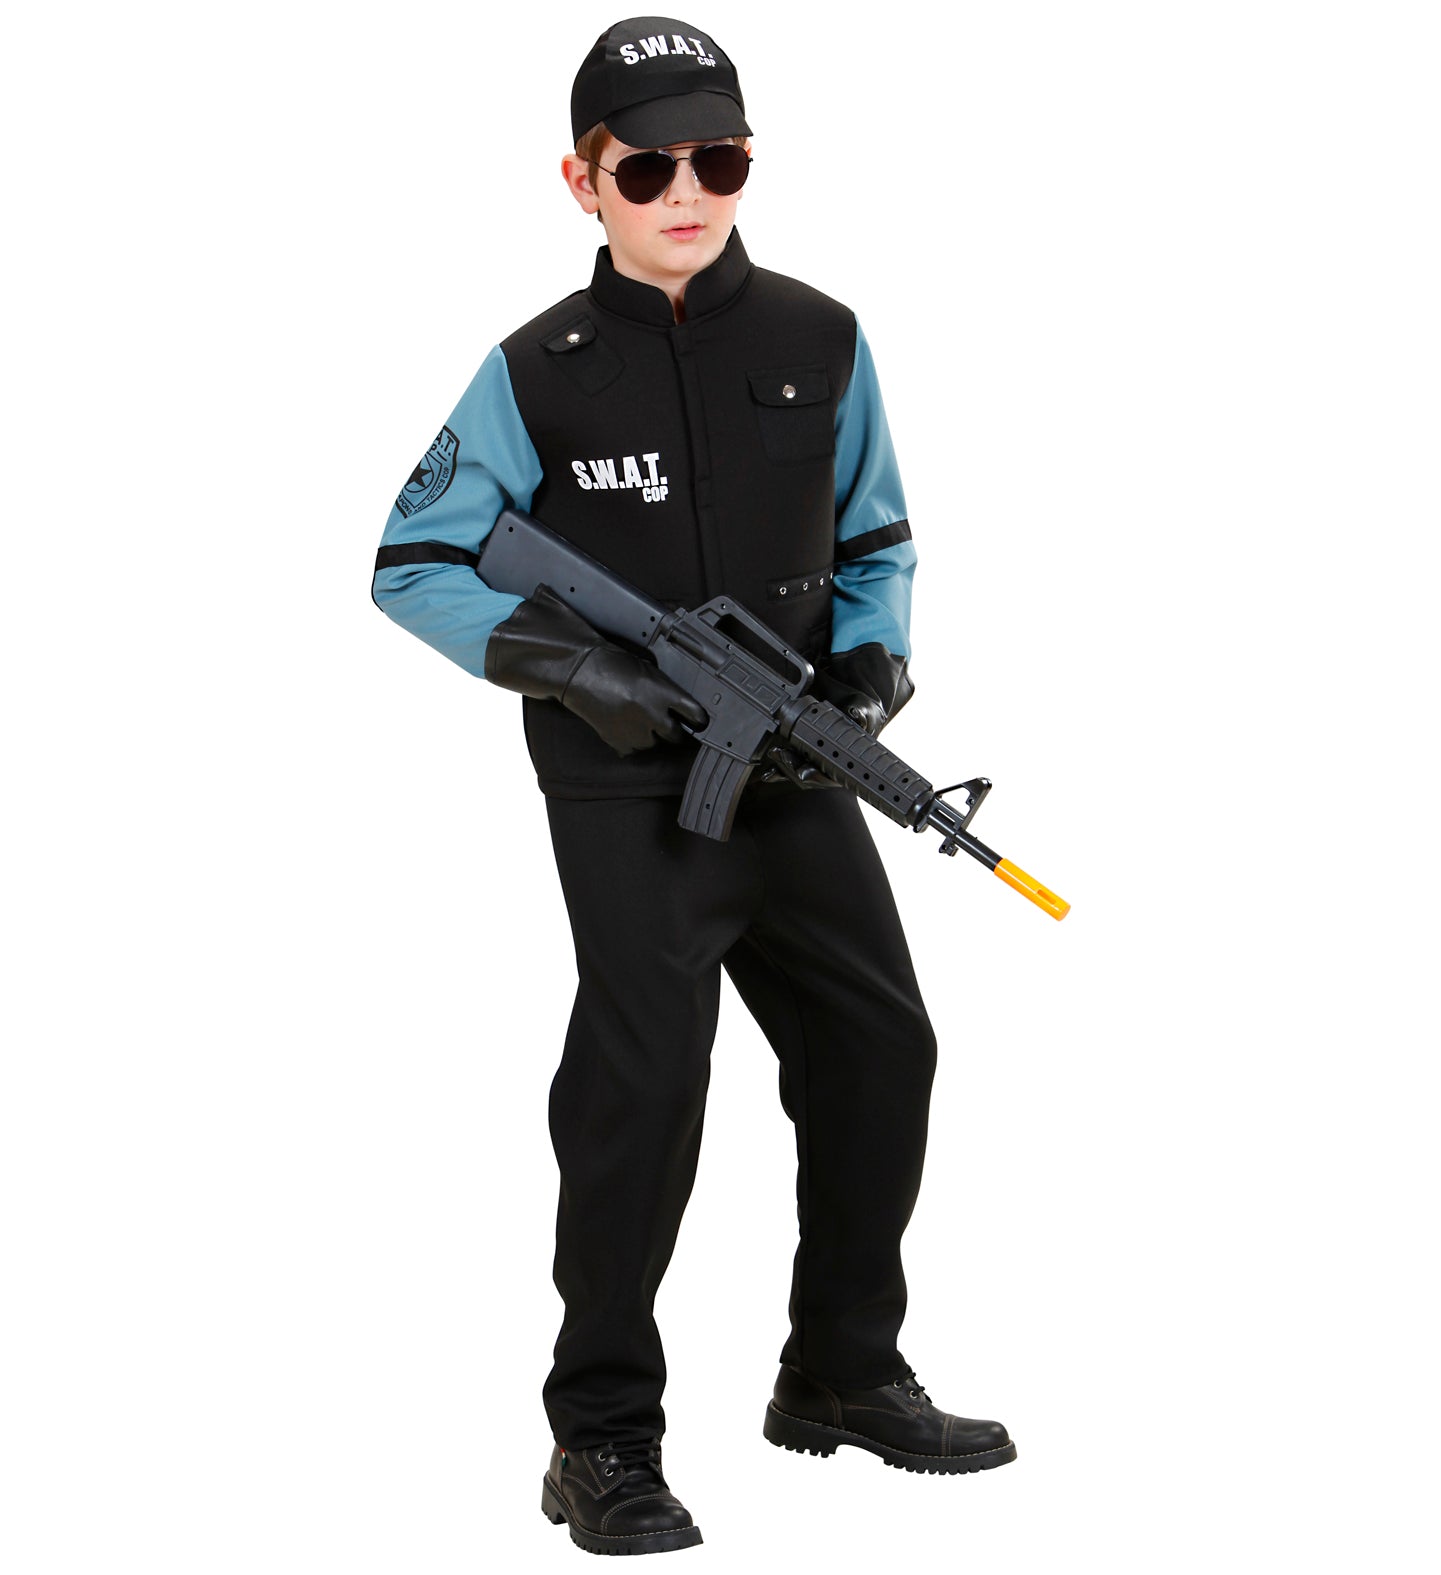 Police SWAT Costume Child's